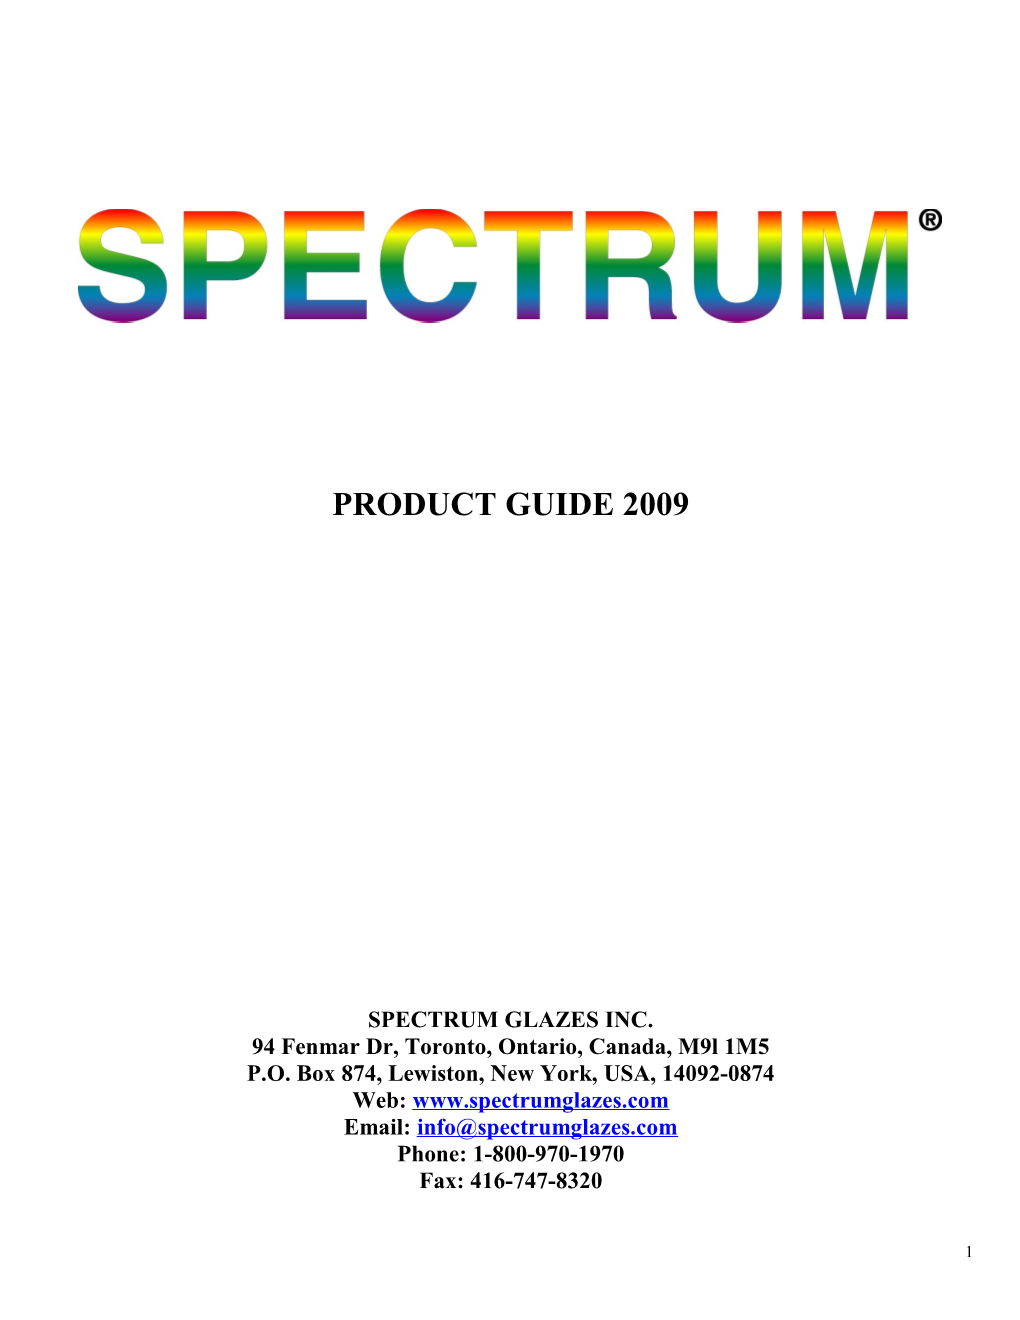 Spectrum Glazes Inc